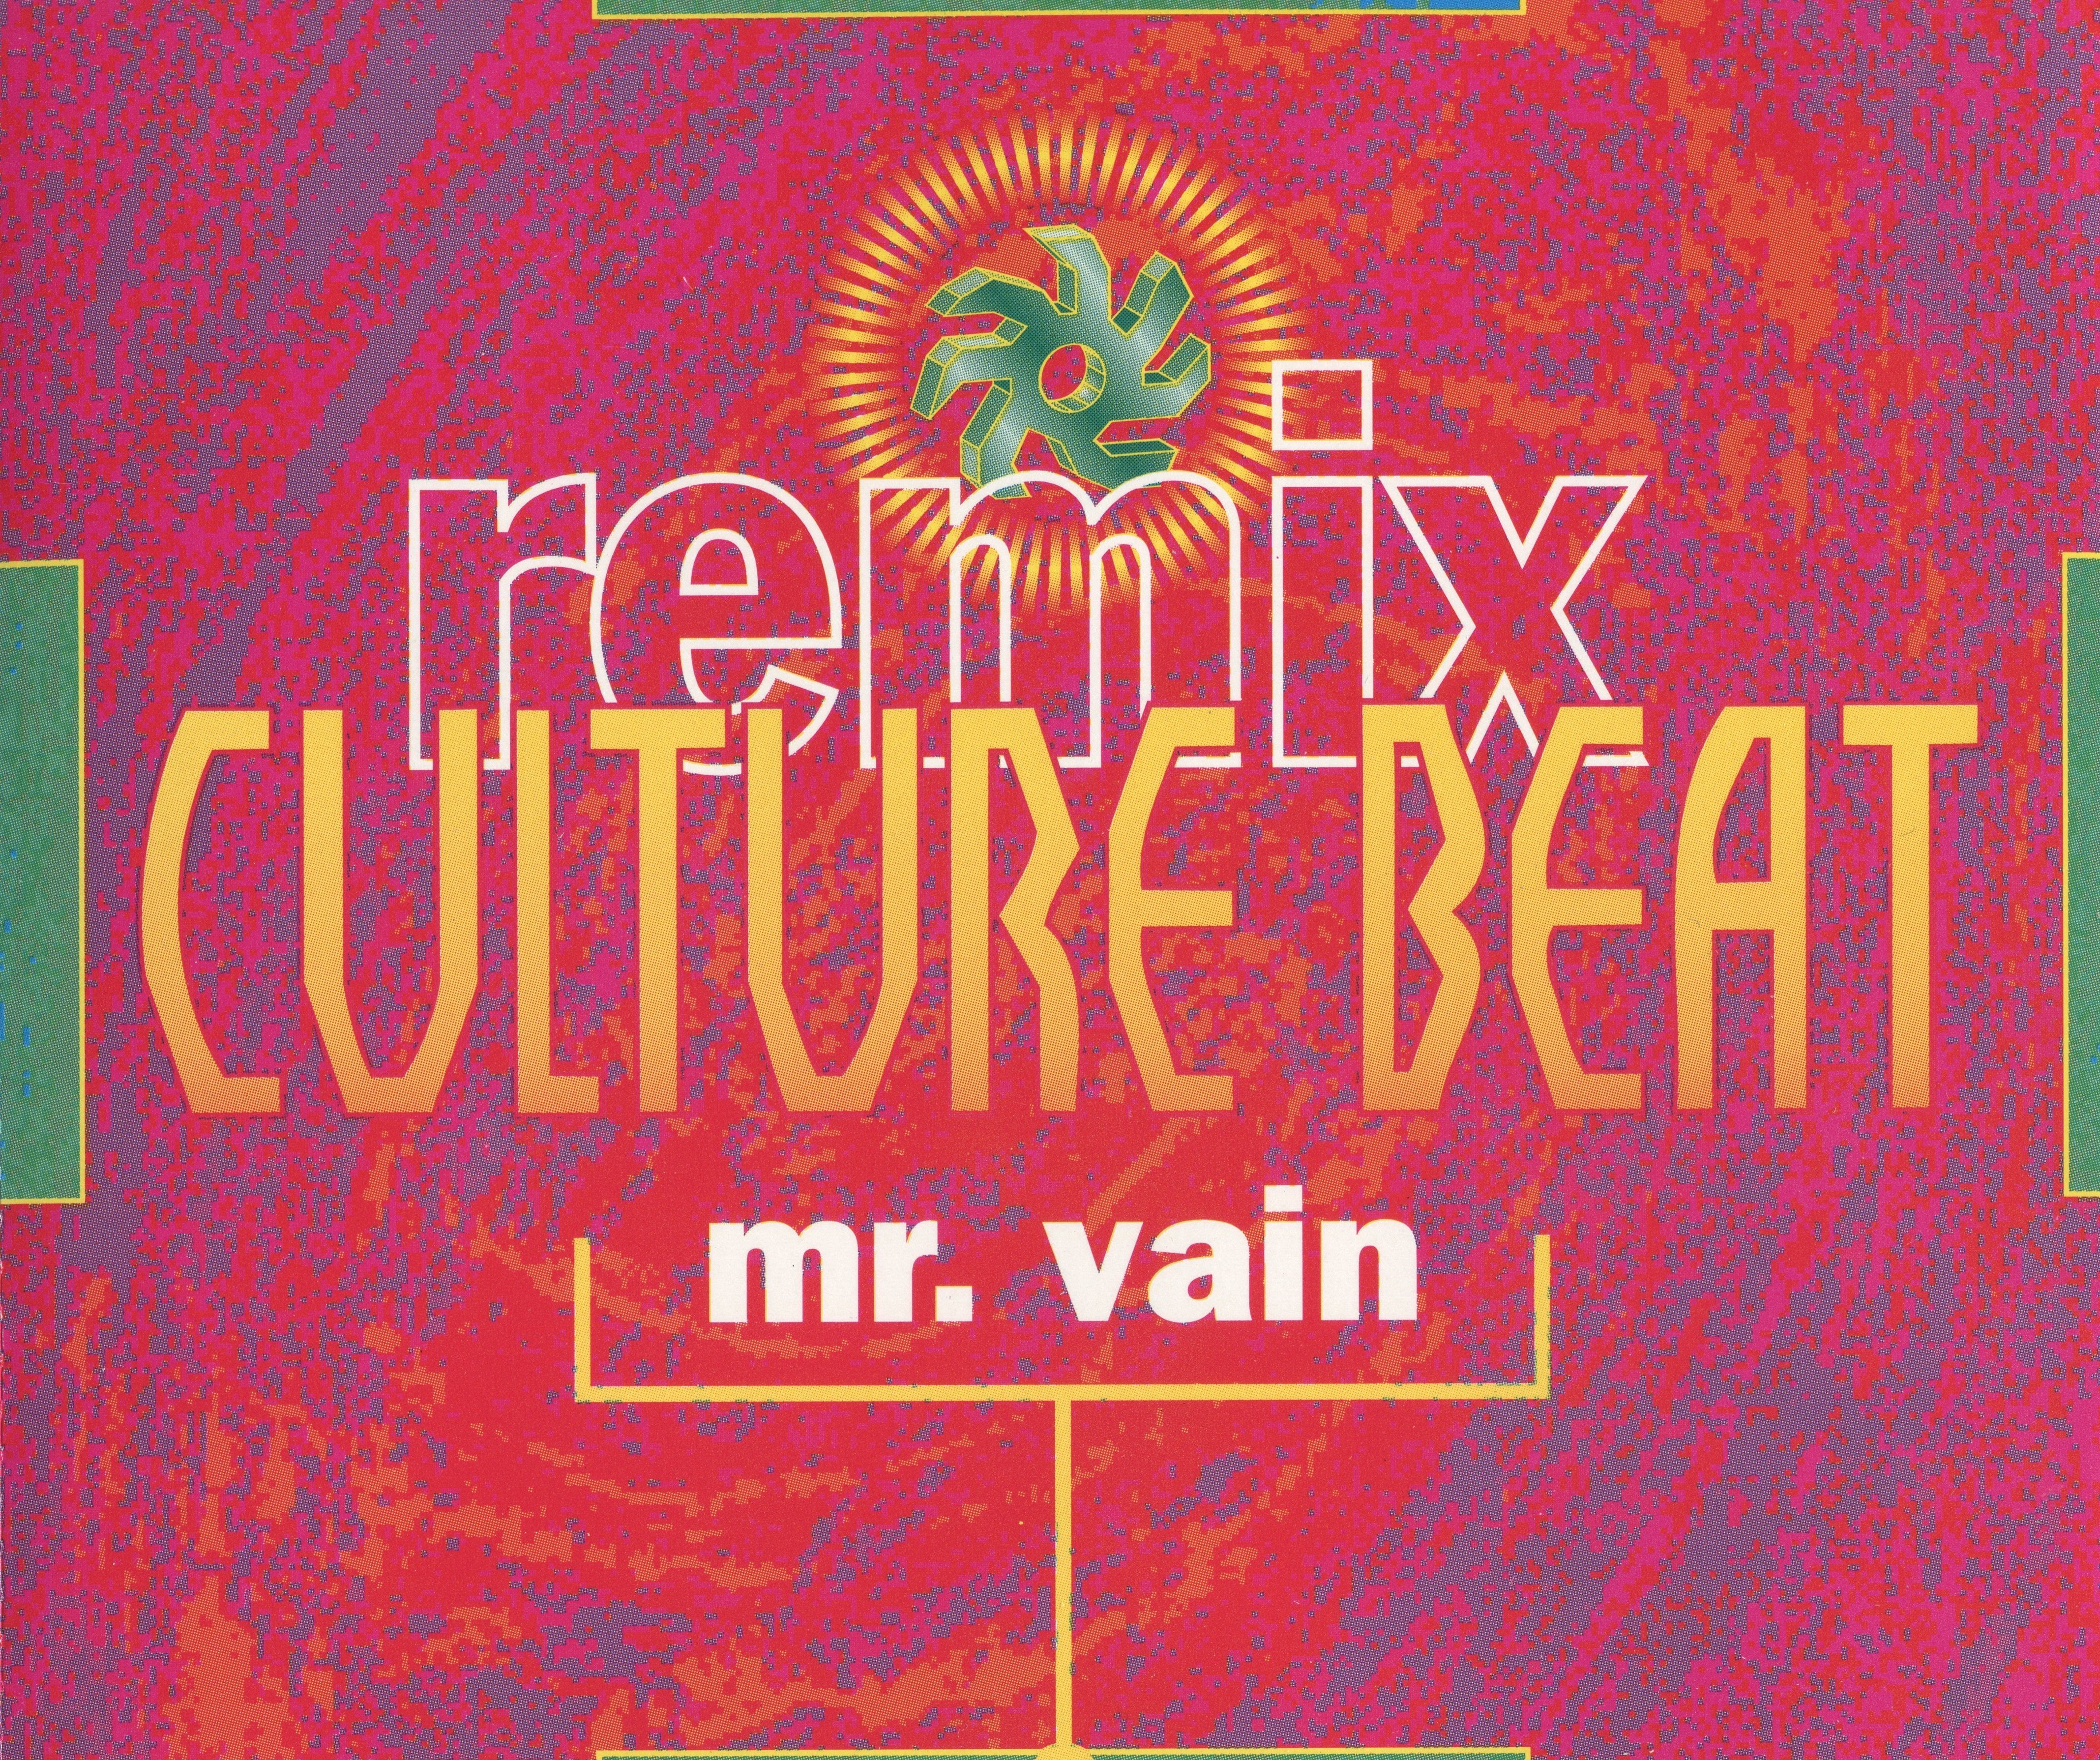 Mr. Vain (Mr. — Culture Beat